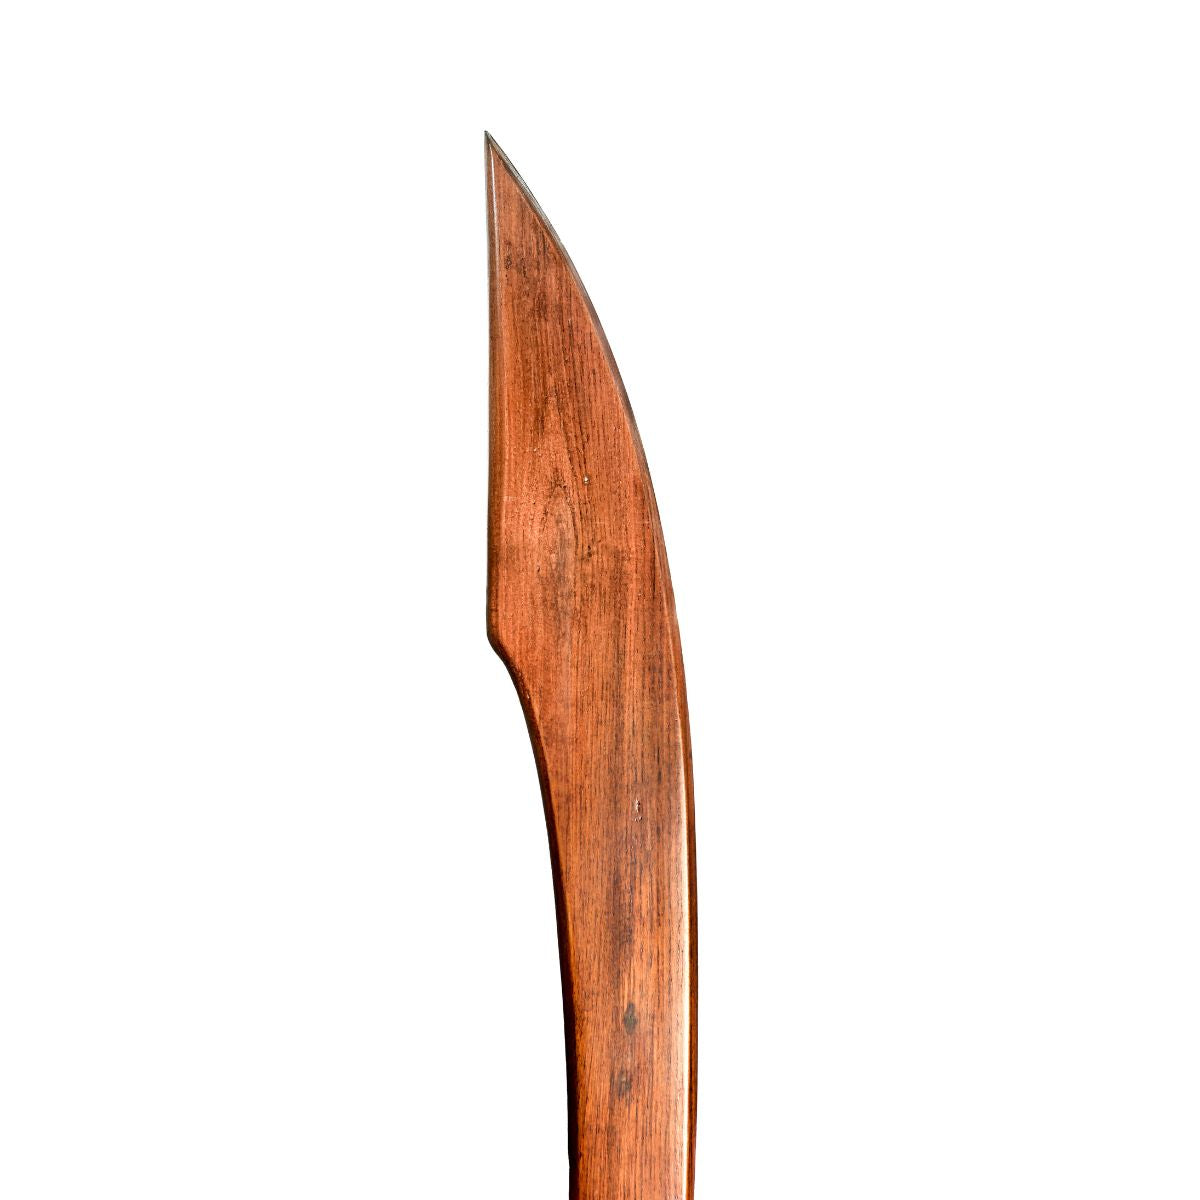 Wushu Wooden Practice Sword - Type B 3